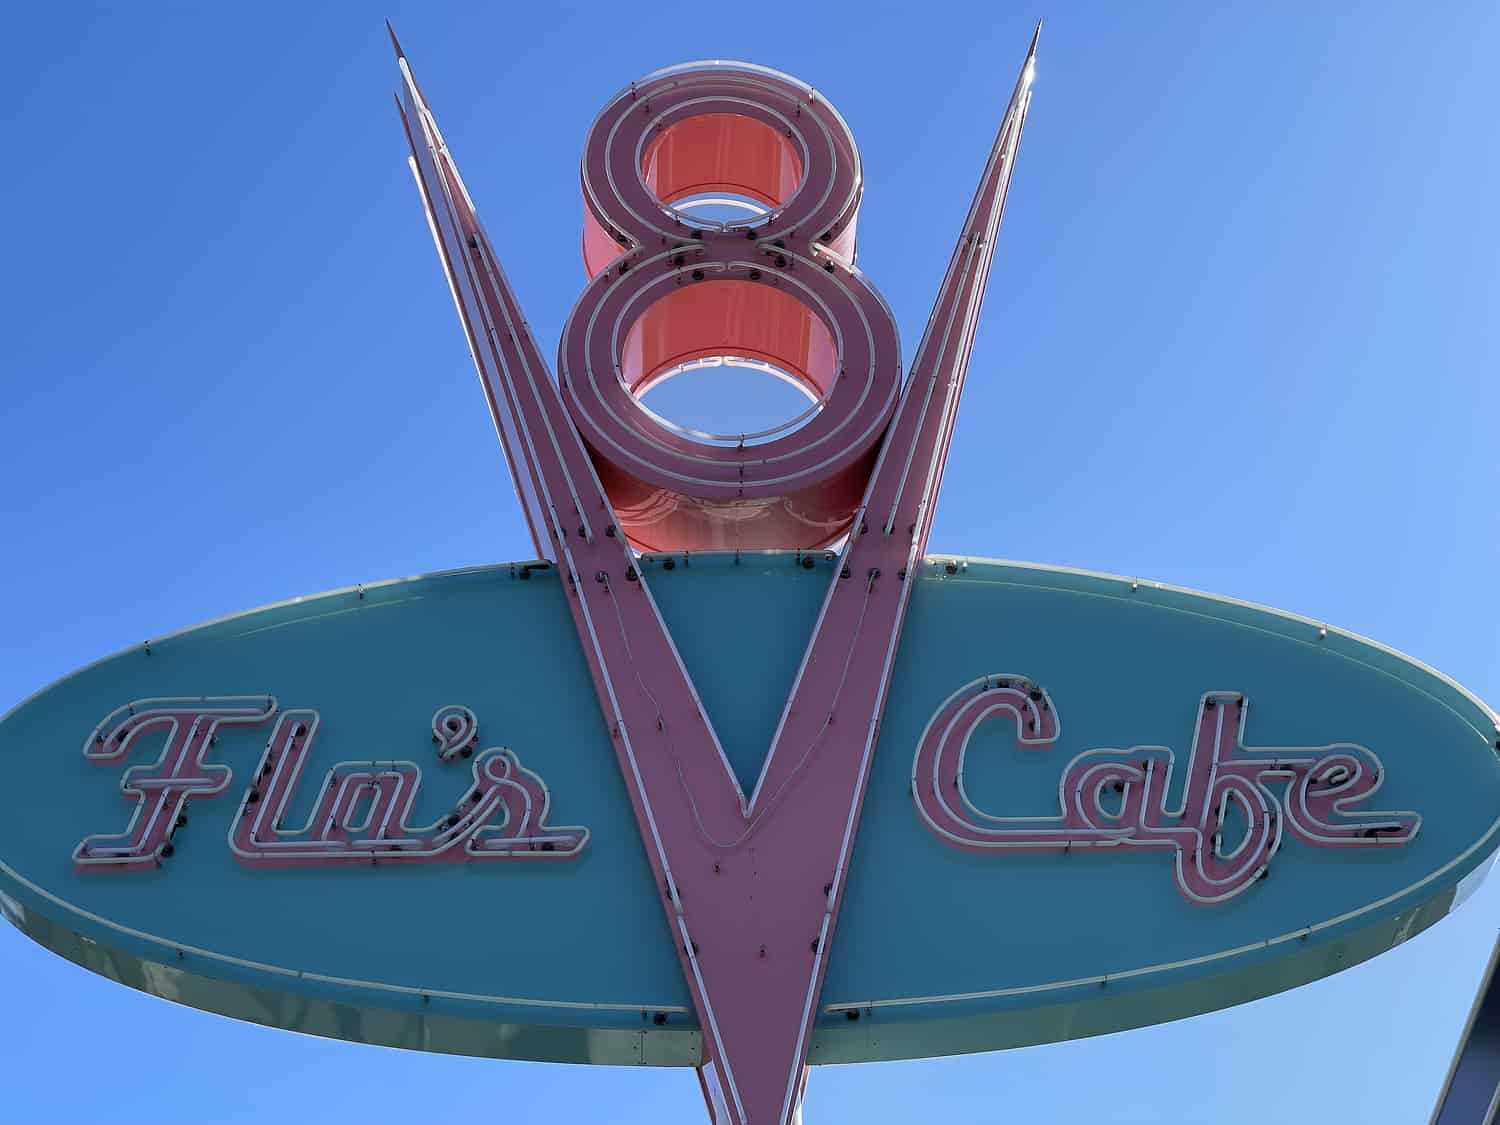 Flos V8 Cafe Disney California Adventure Park | ROAD TRIP: Tucson to Disneyland